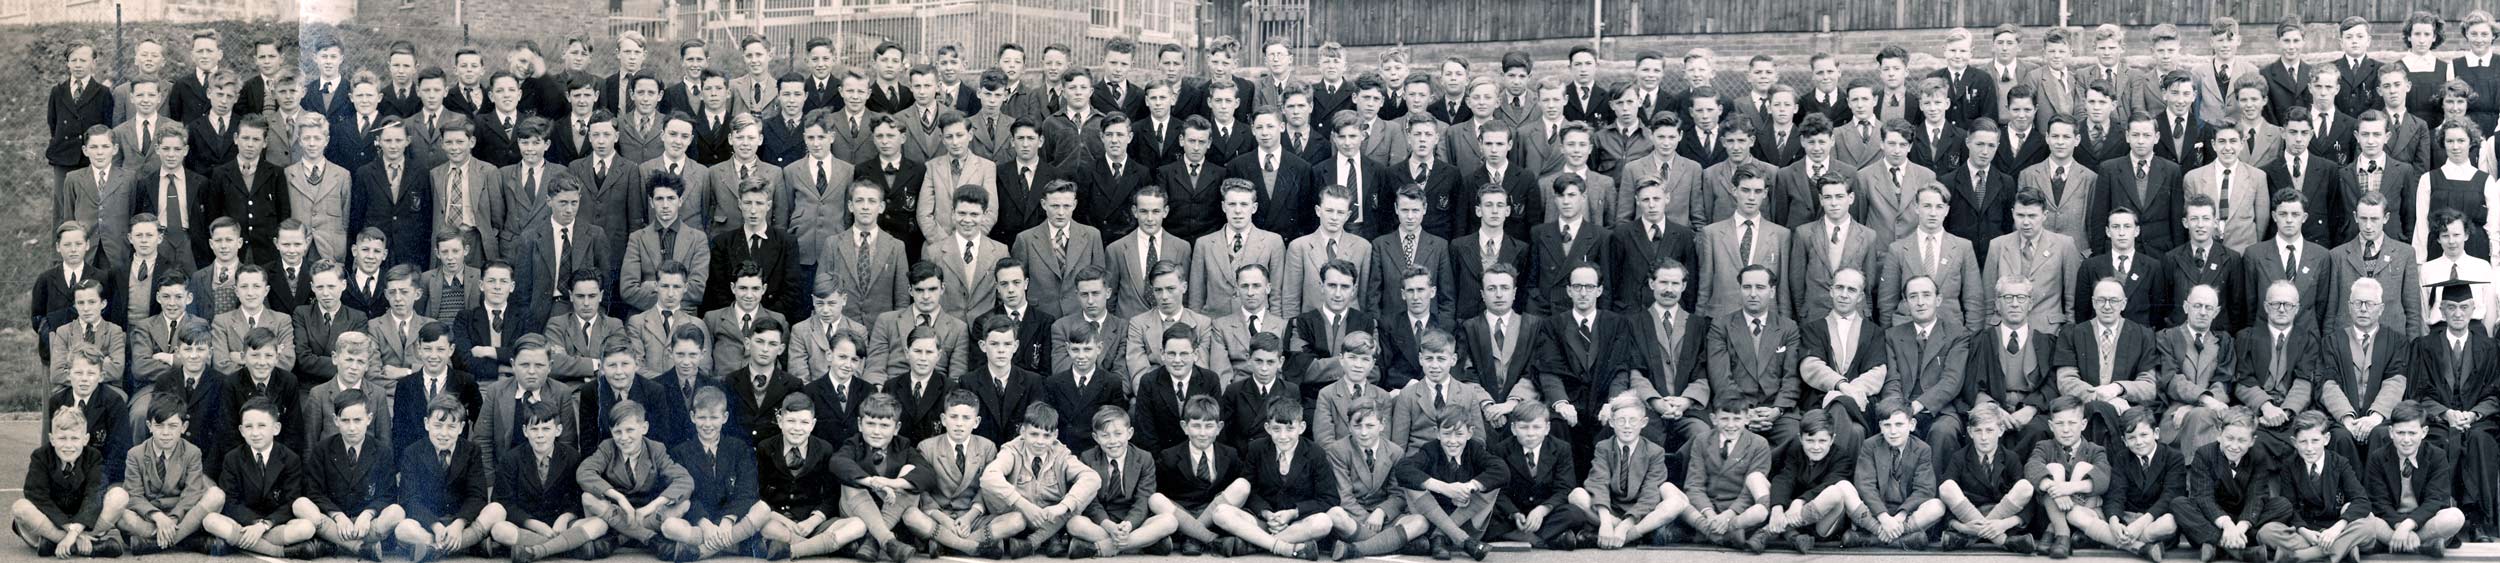 East Dean GS 1954 - Boys